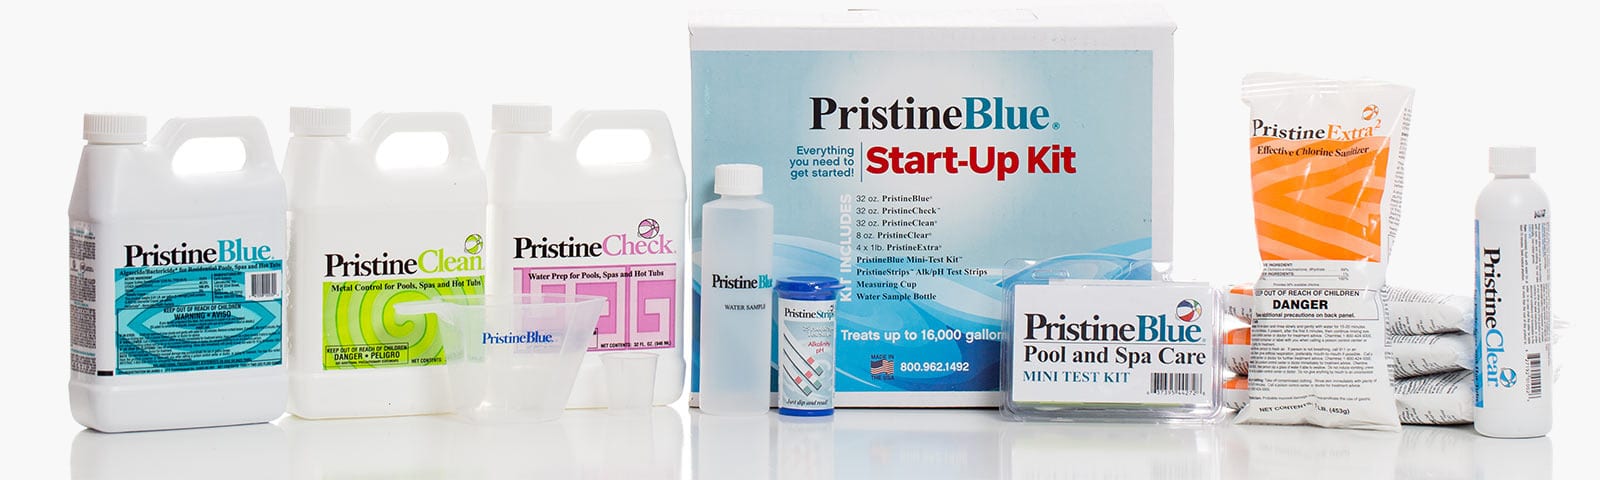 pristine blue product